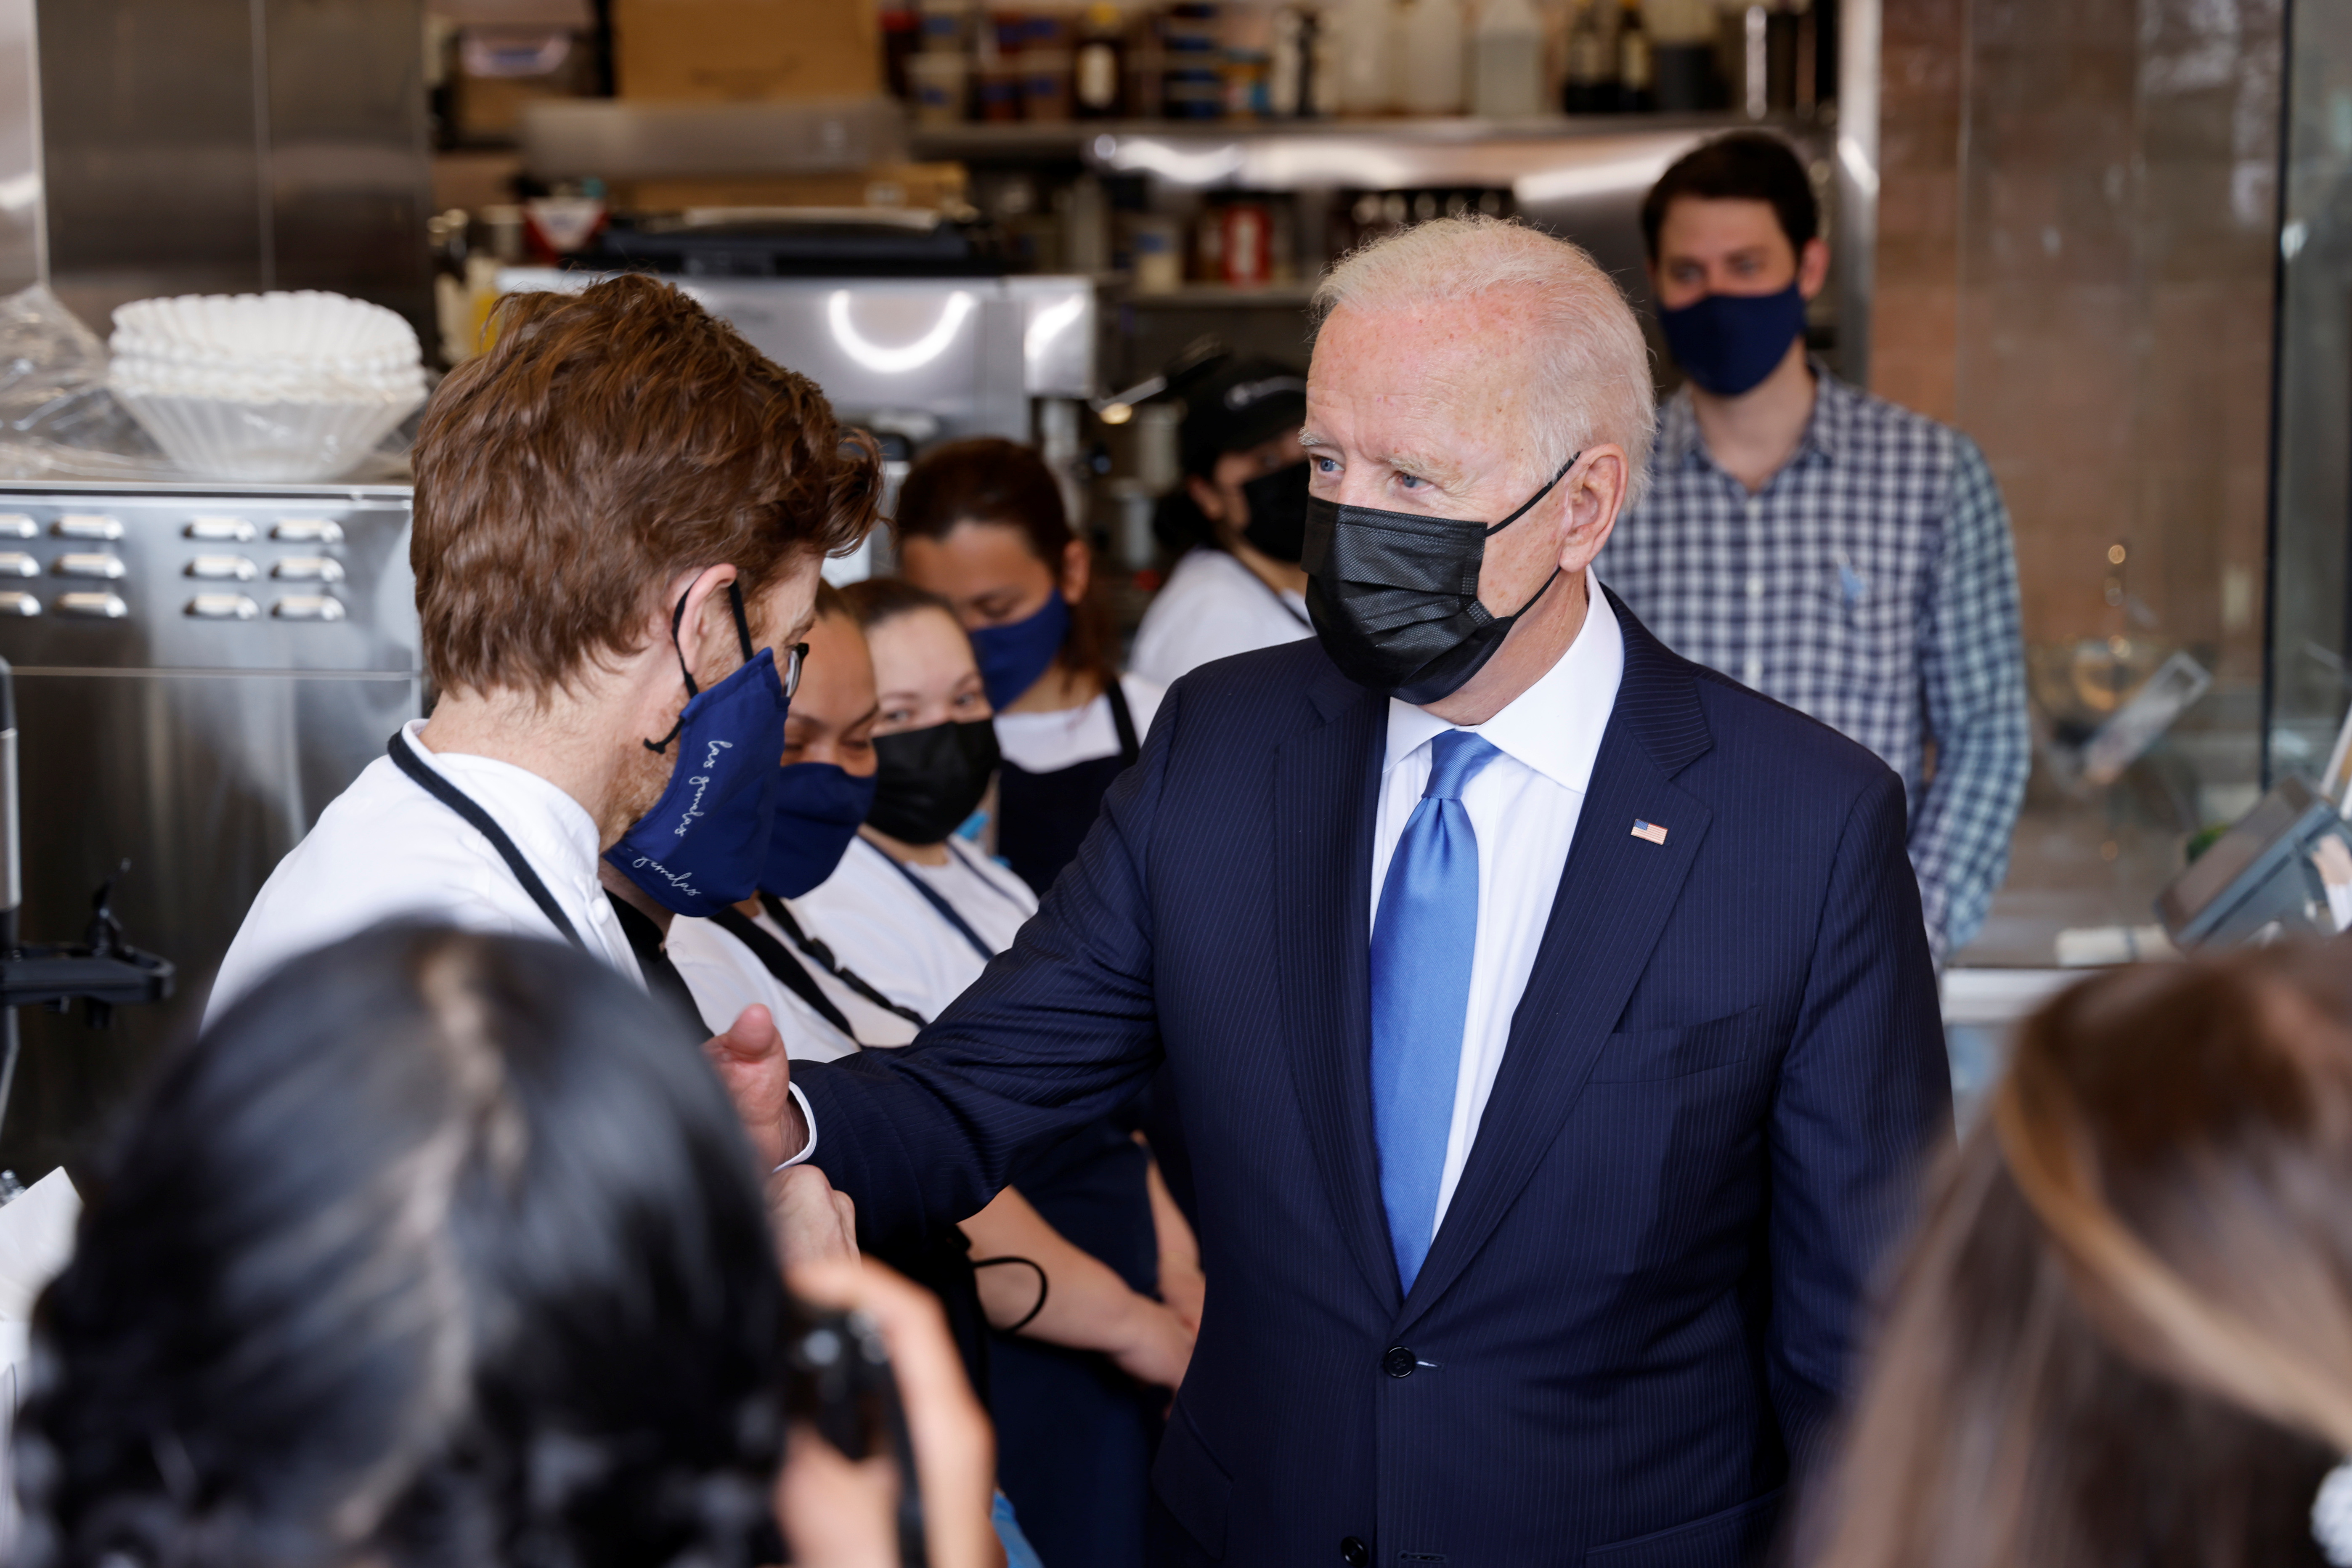 U.S. President Biden visits a Mexican restaurant in the Union Market neighborhood in Washington